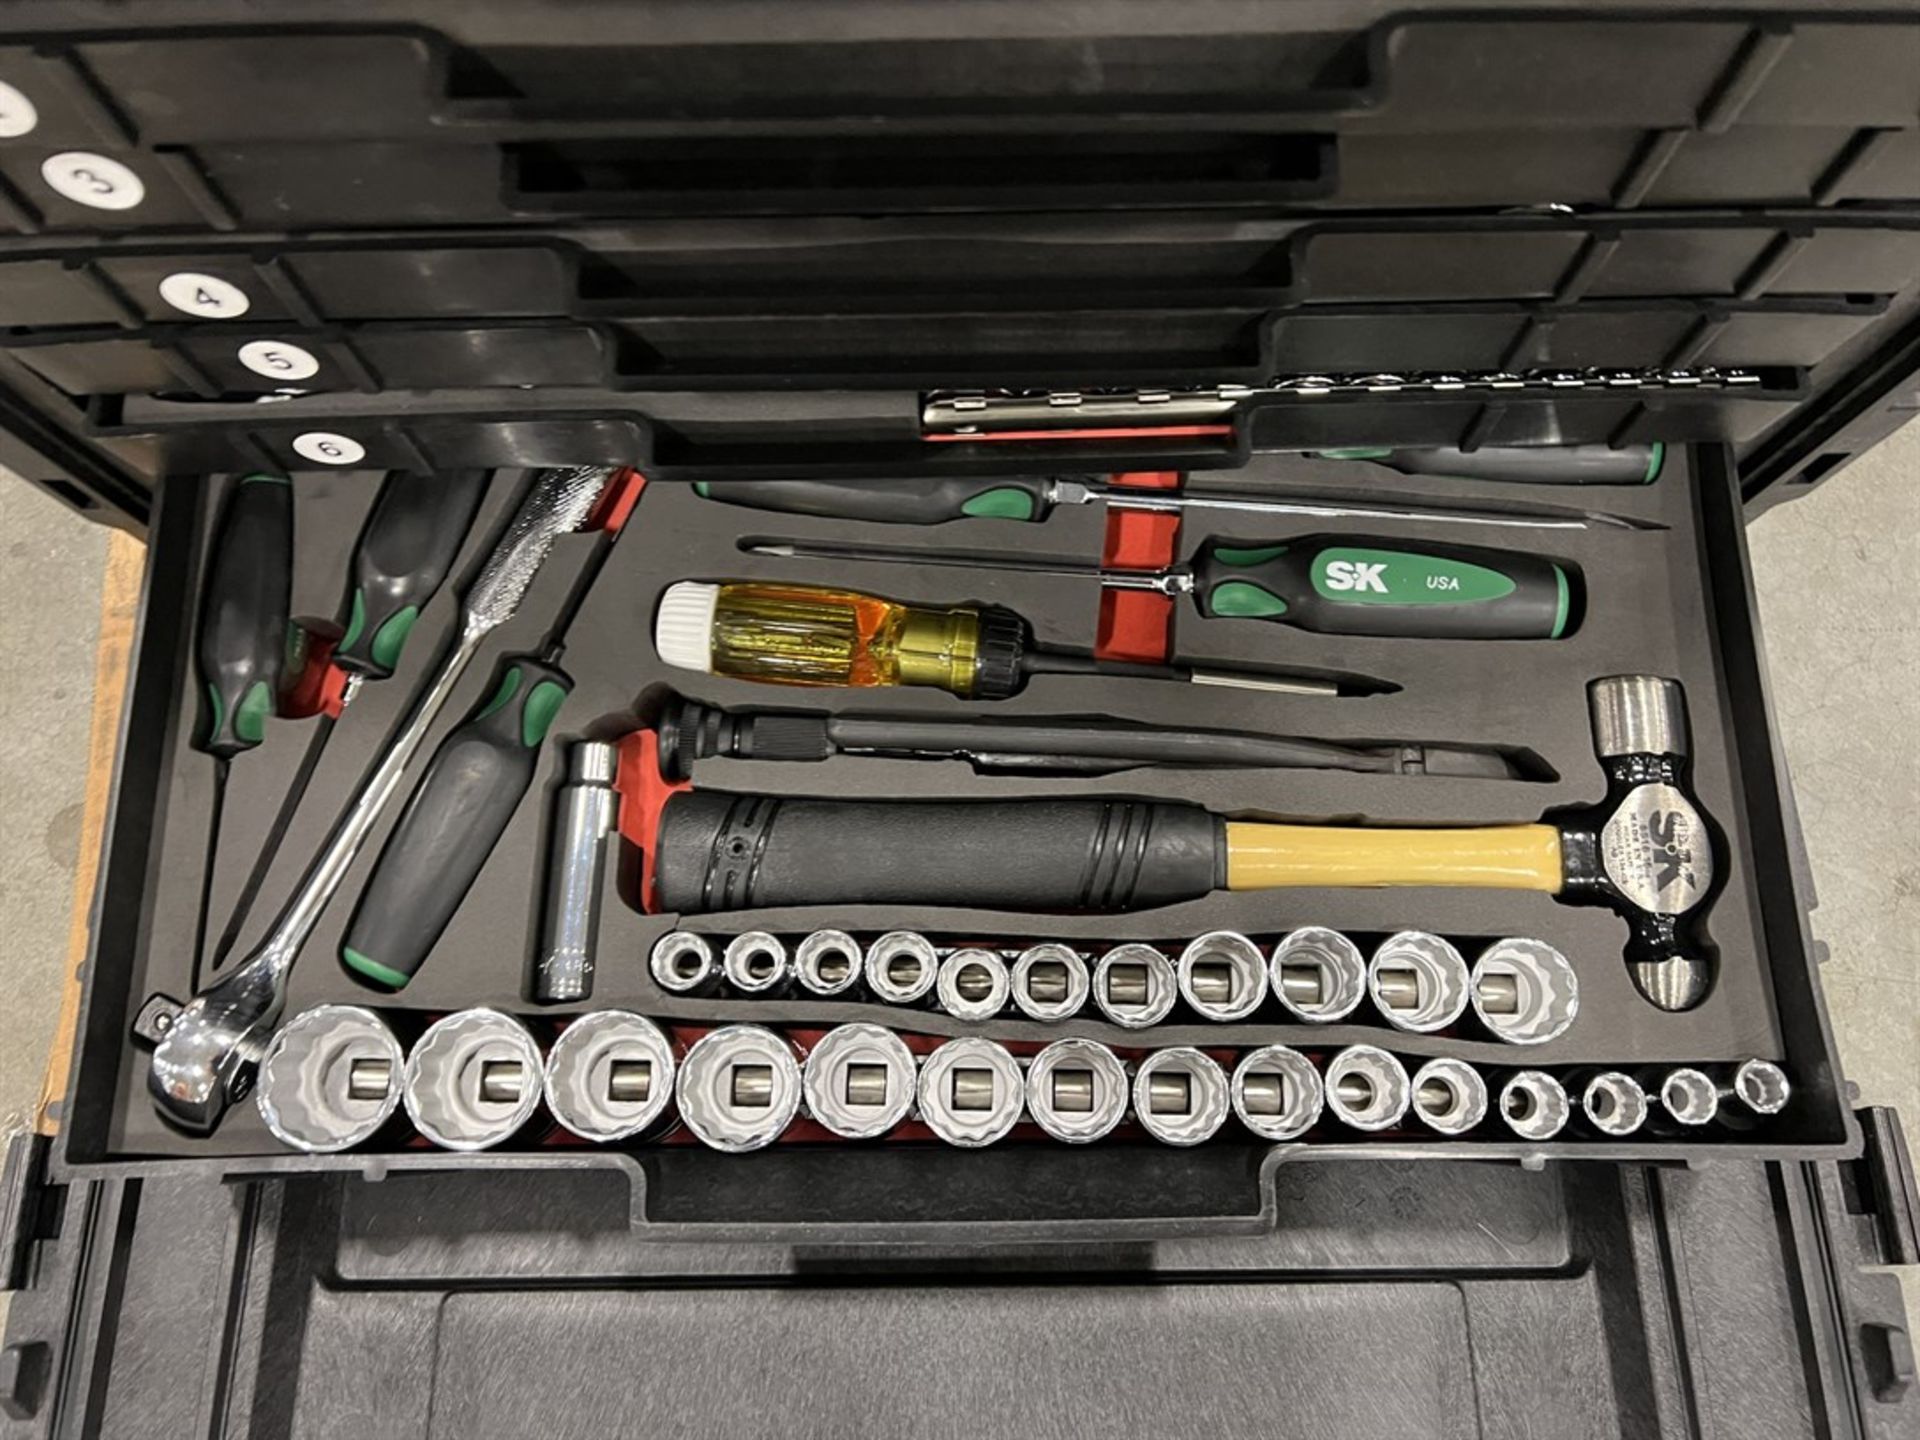 SK TOOL General Mechanics Complete Tool Kit, Including Pelican Case, Sockets, Rachets, Key Set, - Image 11 of 11